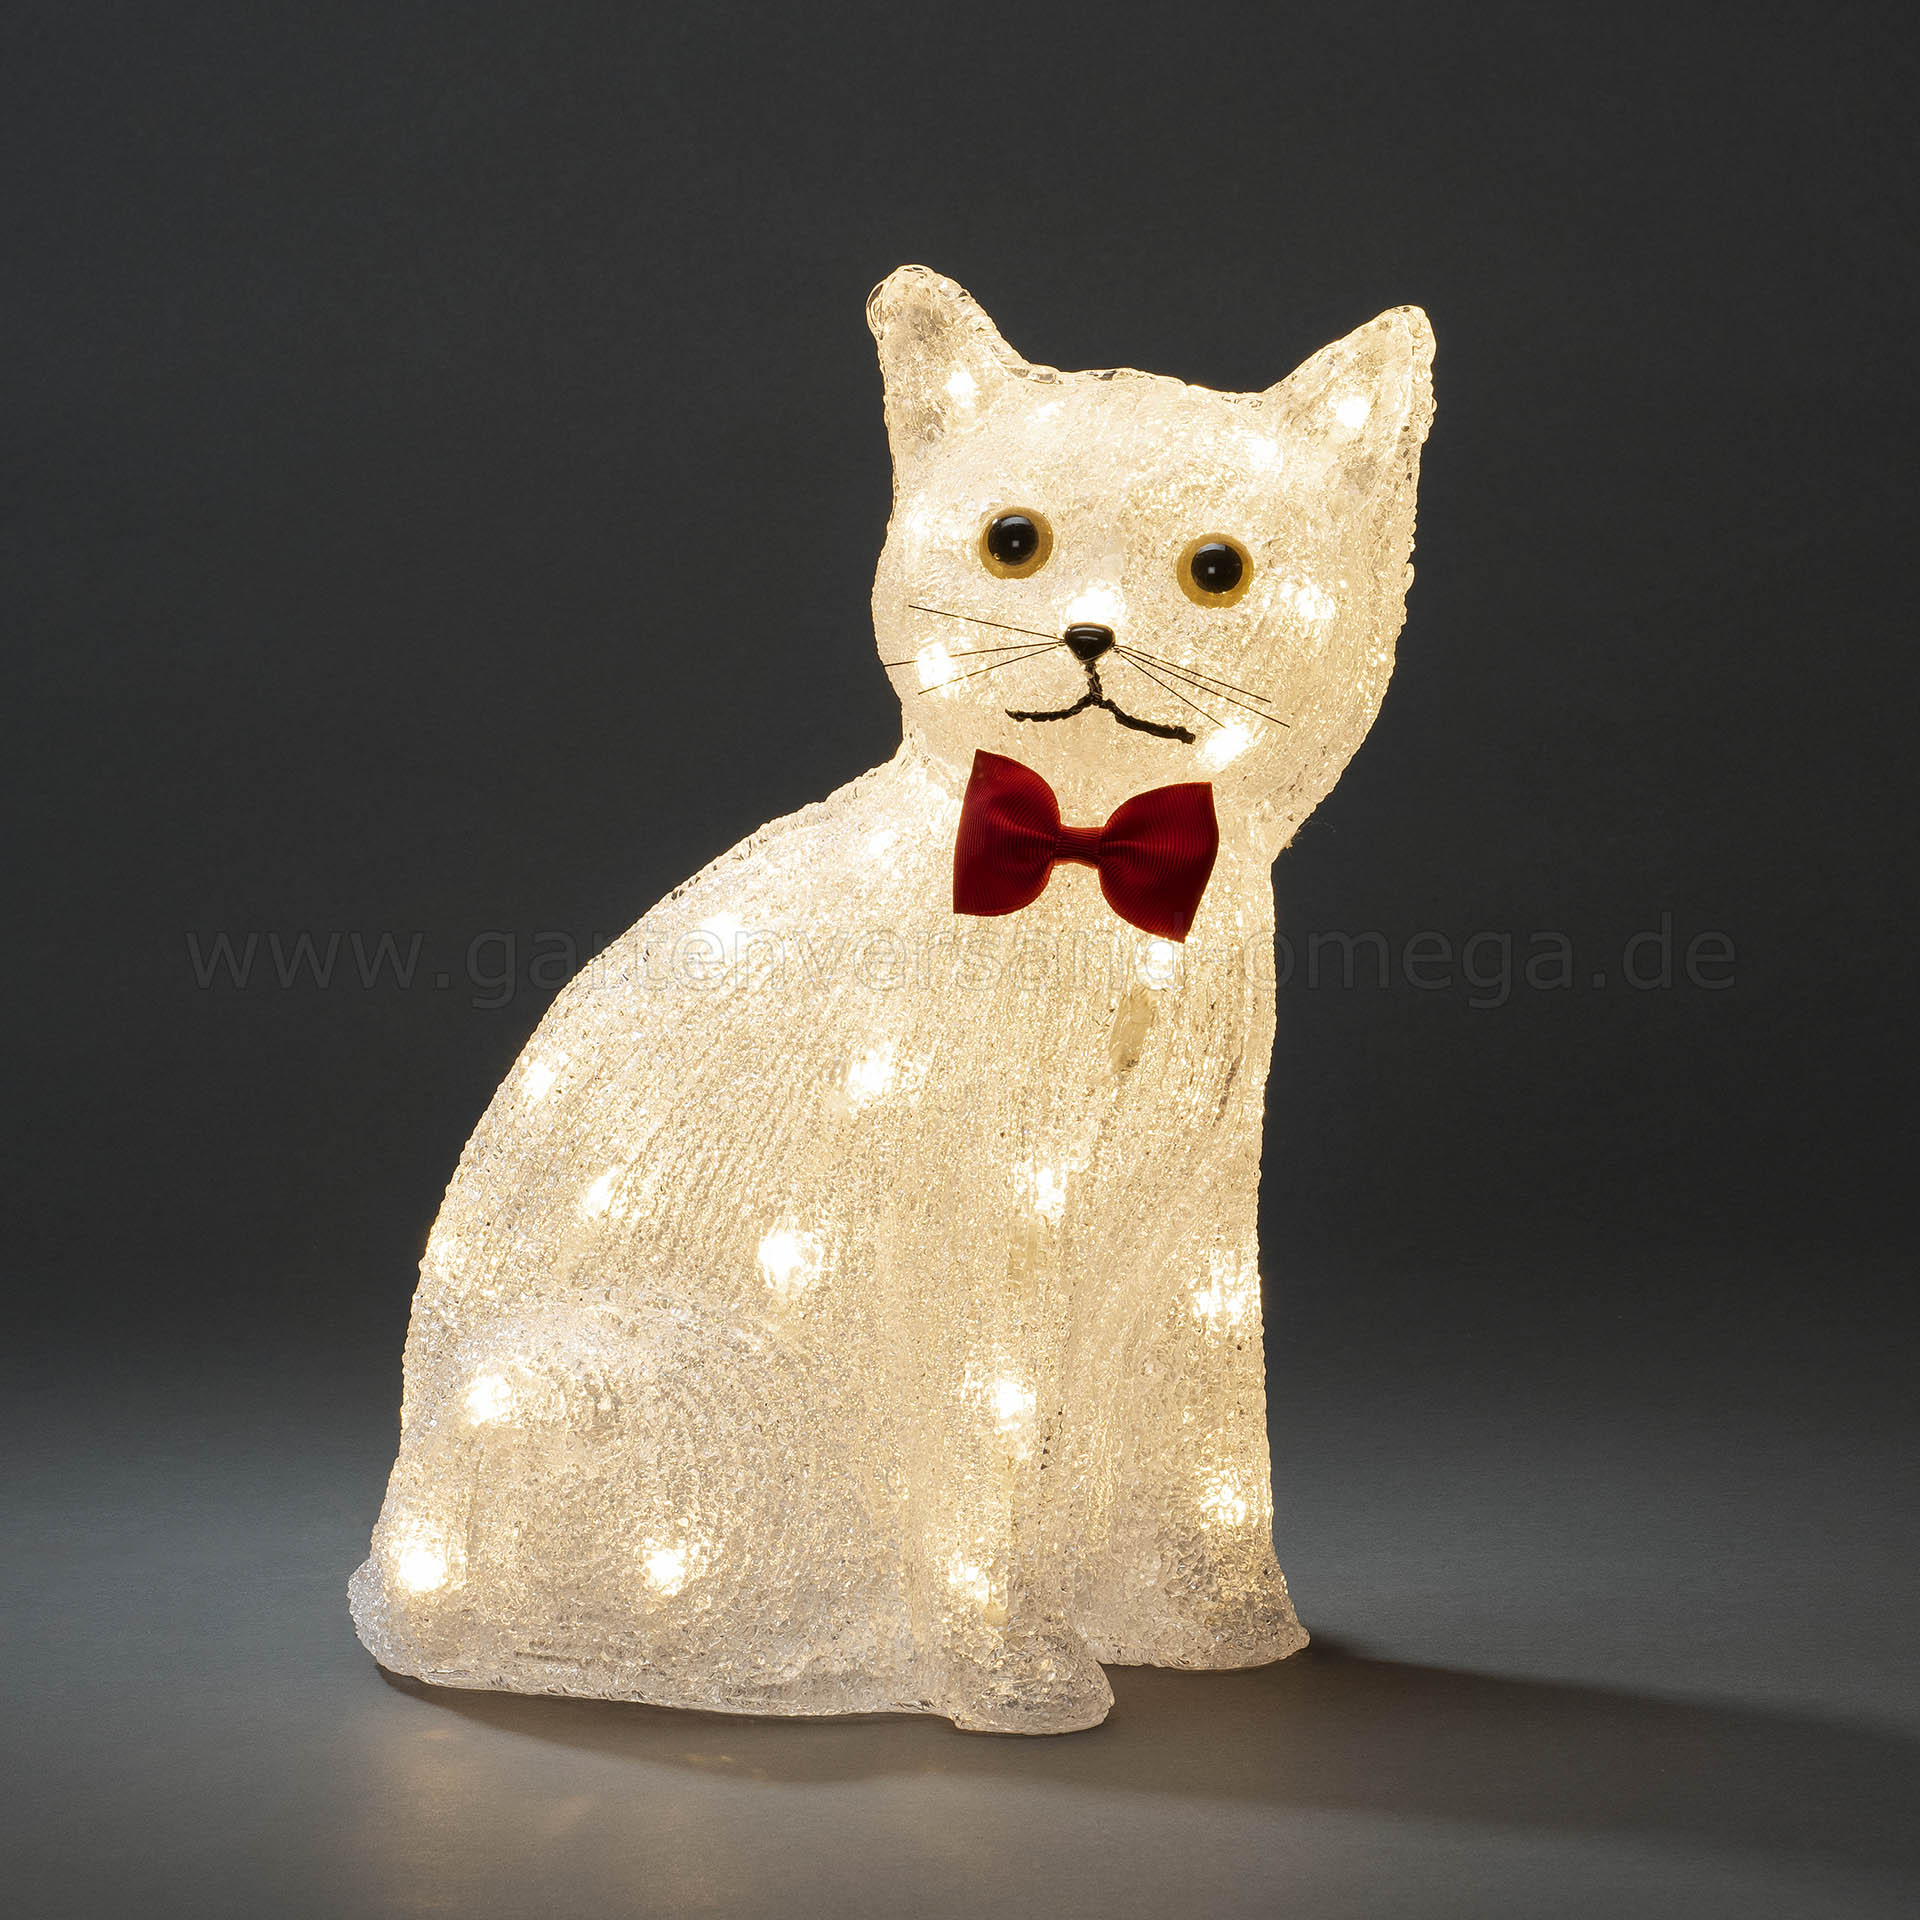 LED-Acryl Katze sitzend - Katze, LED beleuchtet, Figuren beleuchtet, Weihnachtsdekoration Katzenfigur Katze Deko Katze, Tierfiguren beleuchtet, Weihnachtsbeleuchtung Katze, Leuchtdekoration Acrylfigur Außen LED-Katze